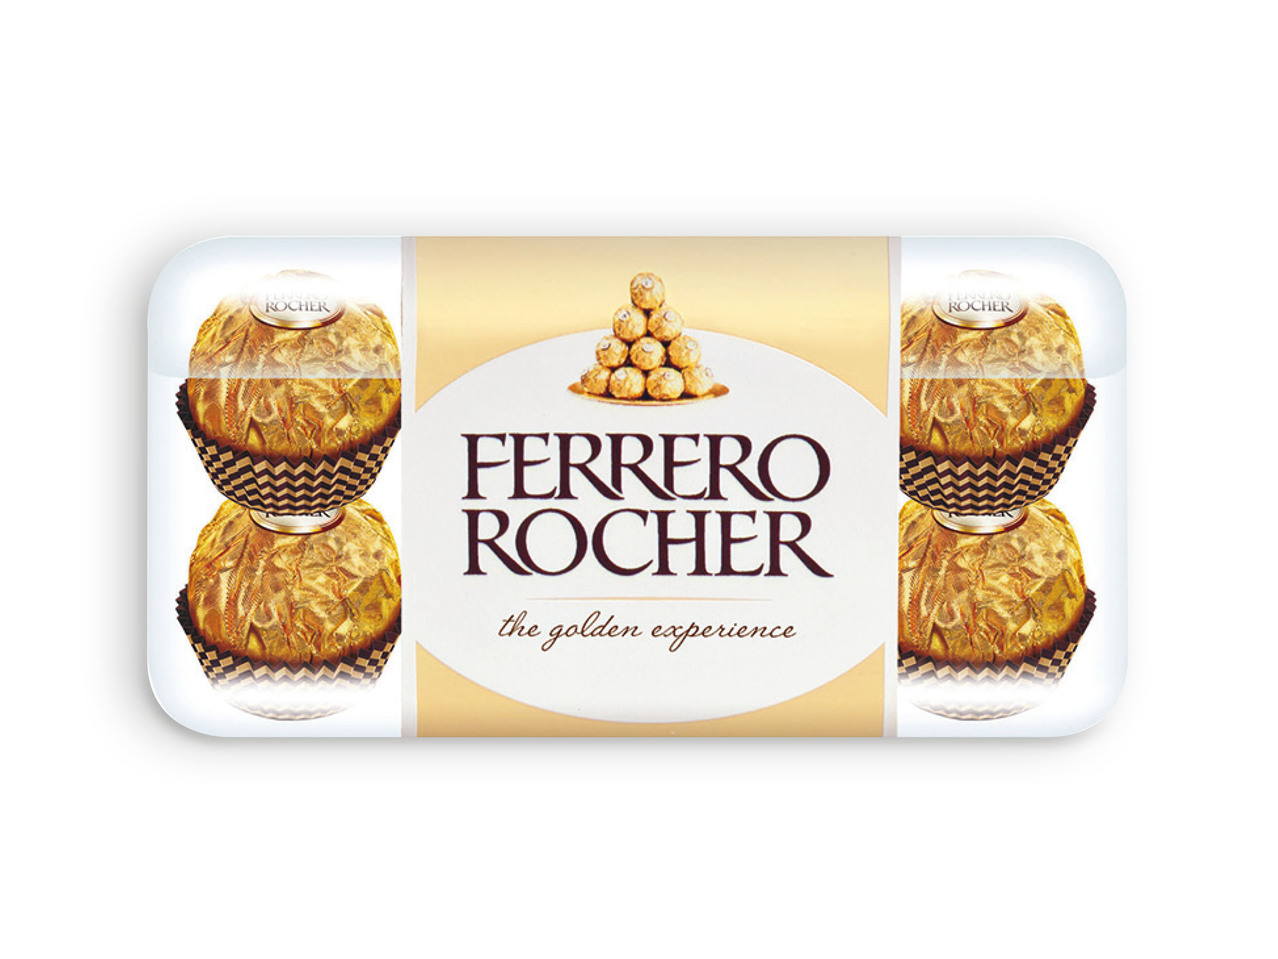 FERRERO(R) Ferrero Rocher